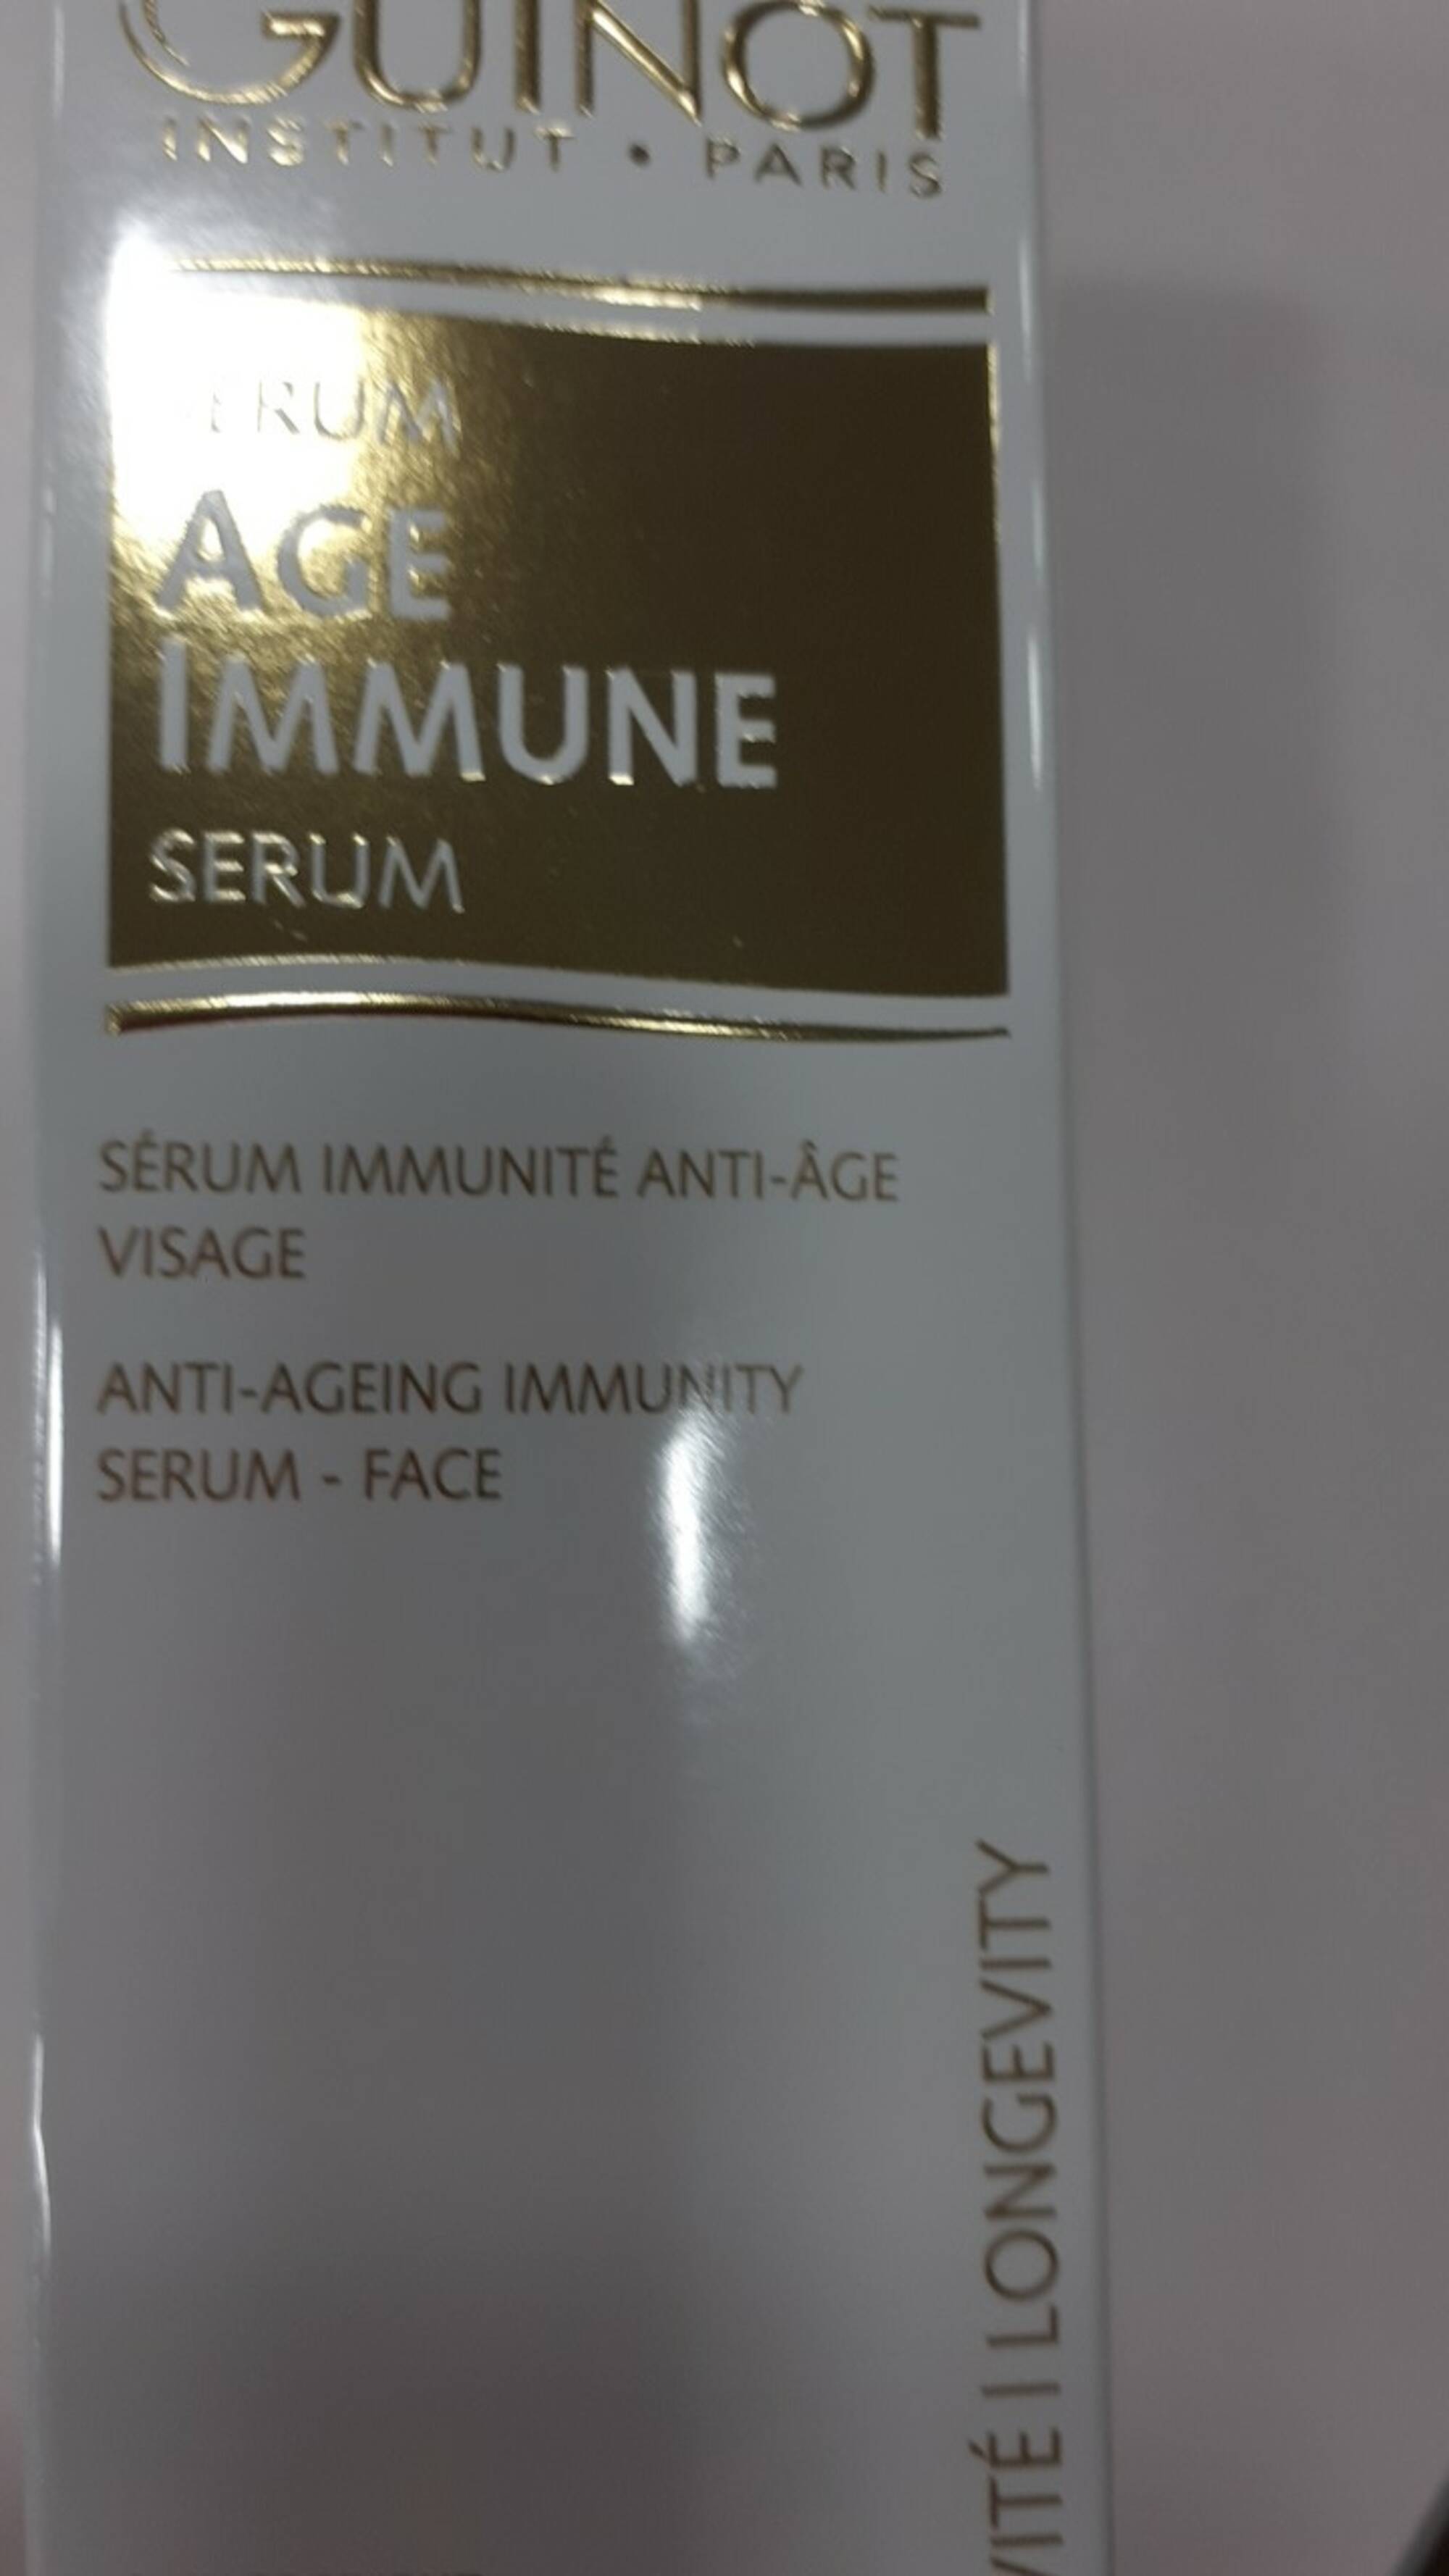 GUINOT - Sérum immunité anti-âge visage